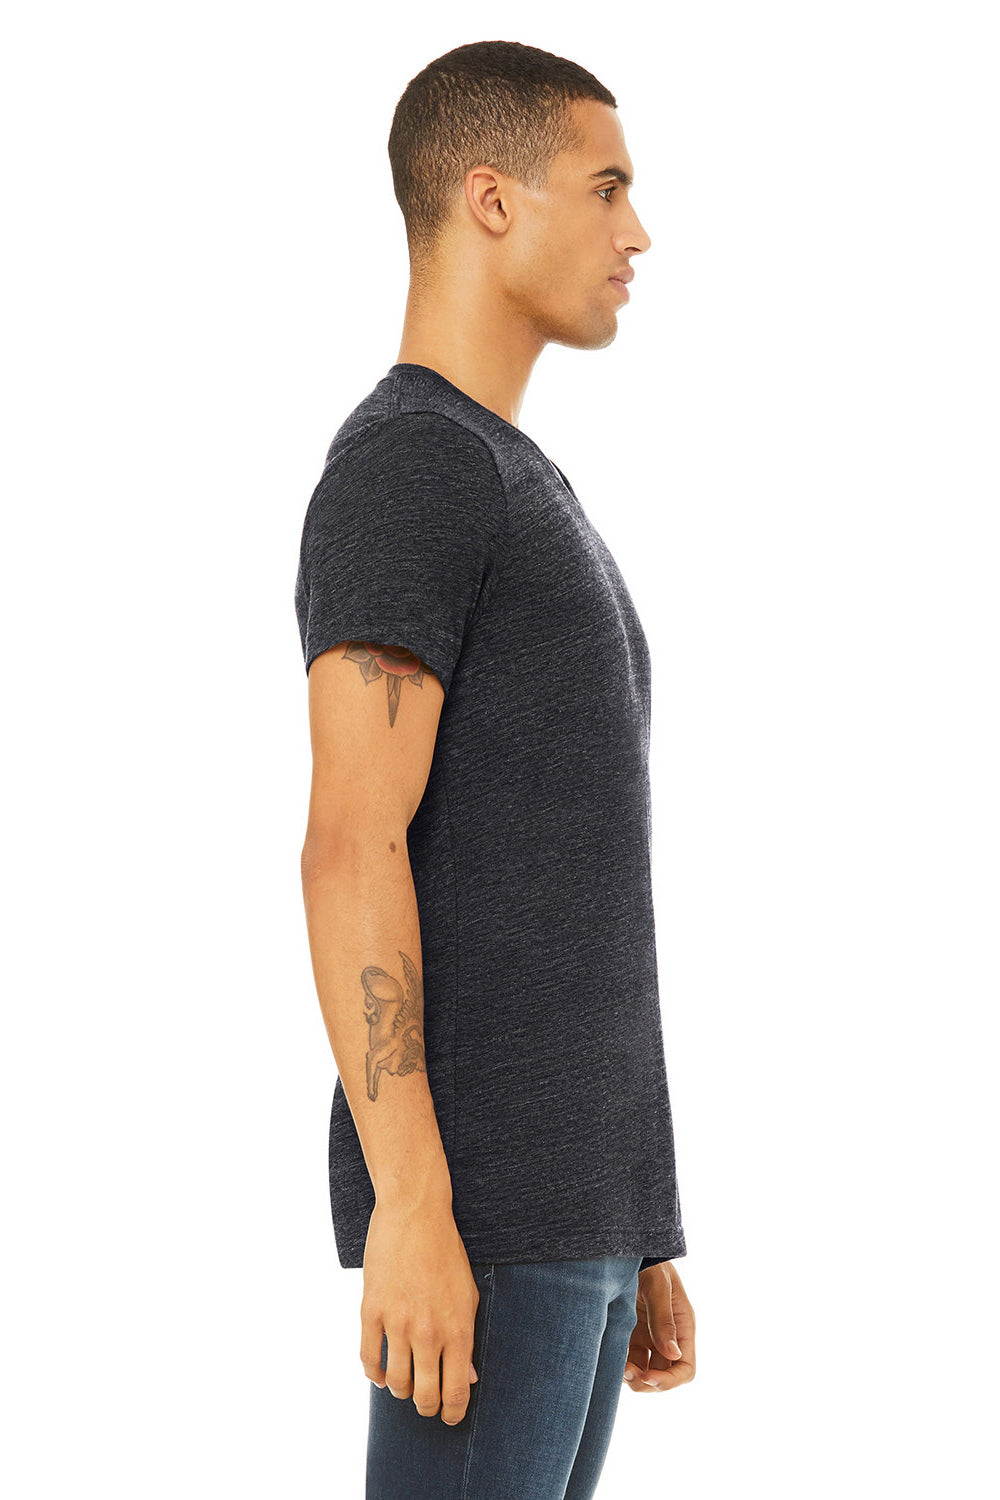 Bella + Canvas BC3005/3005/3655C Mens Jersey Short Sleeve V-Neck T-Shirt Charcoal Black Slub Model Side